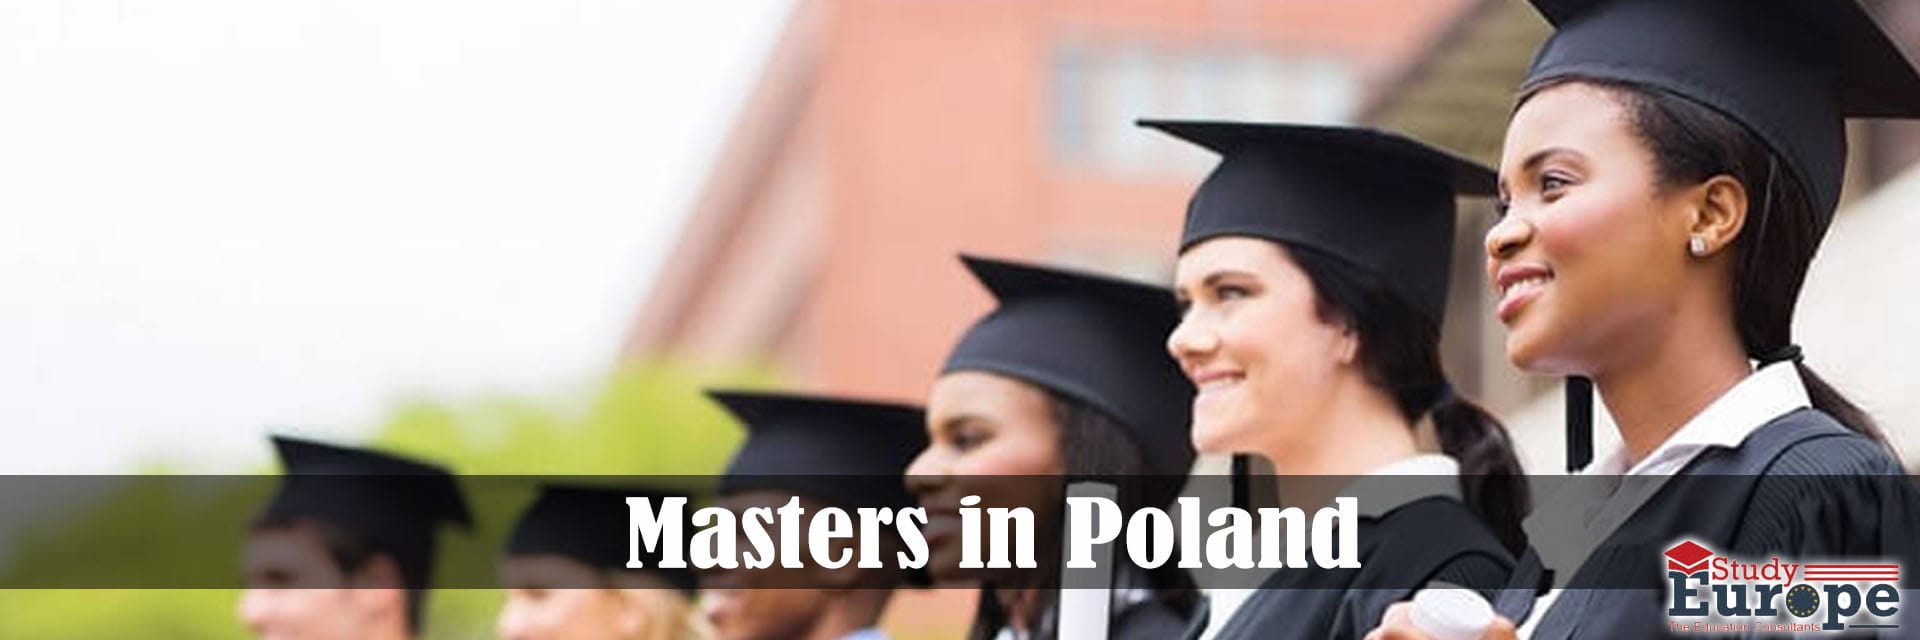 Master in Poland